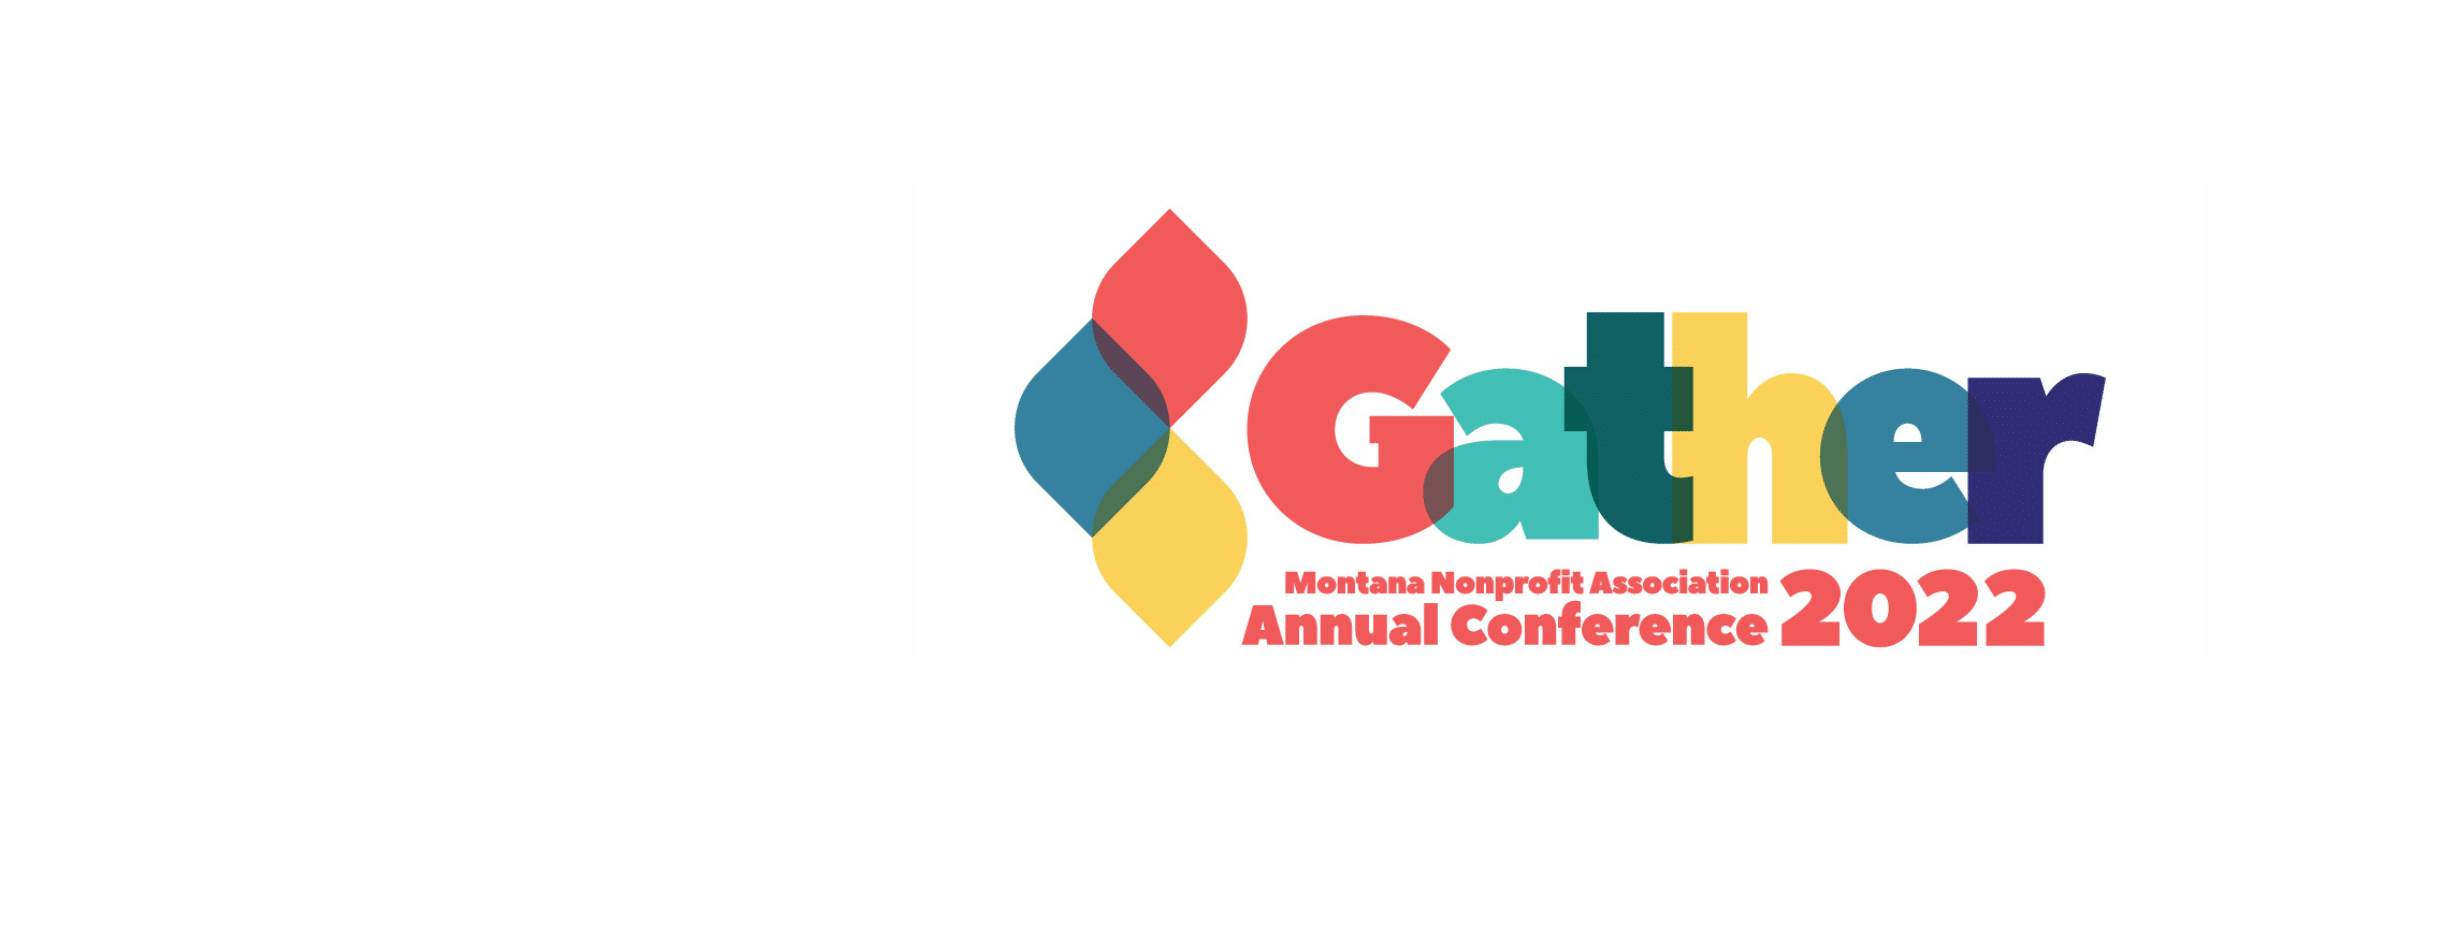 Gather: Montana Nonprofit Association Annual Conference 2022